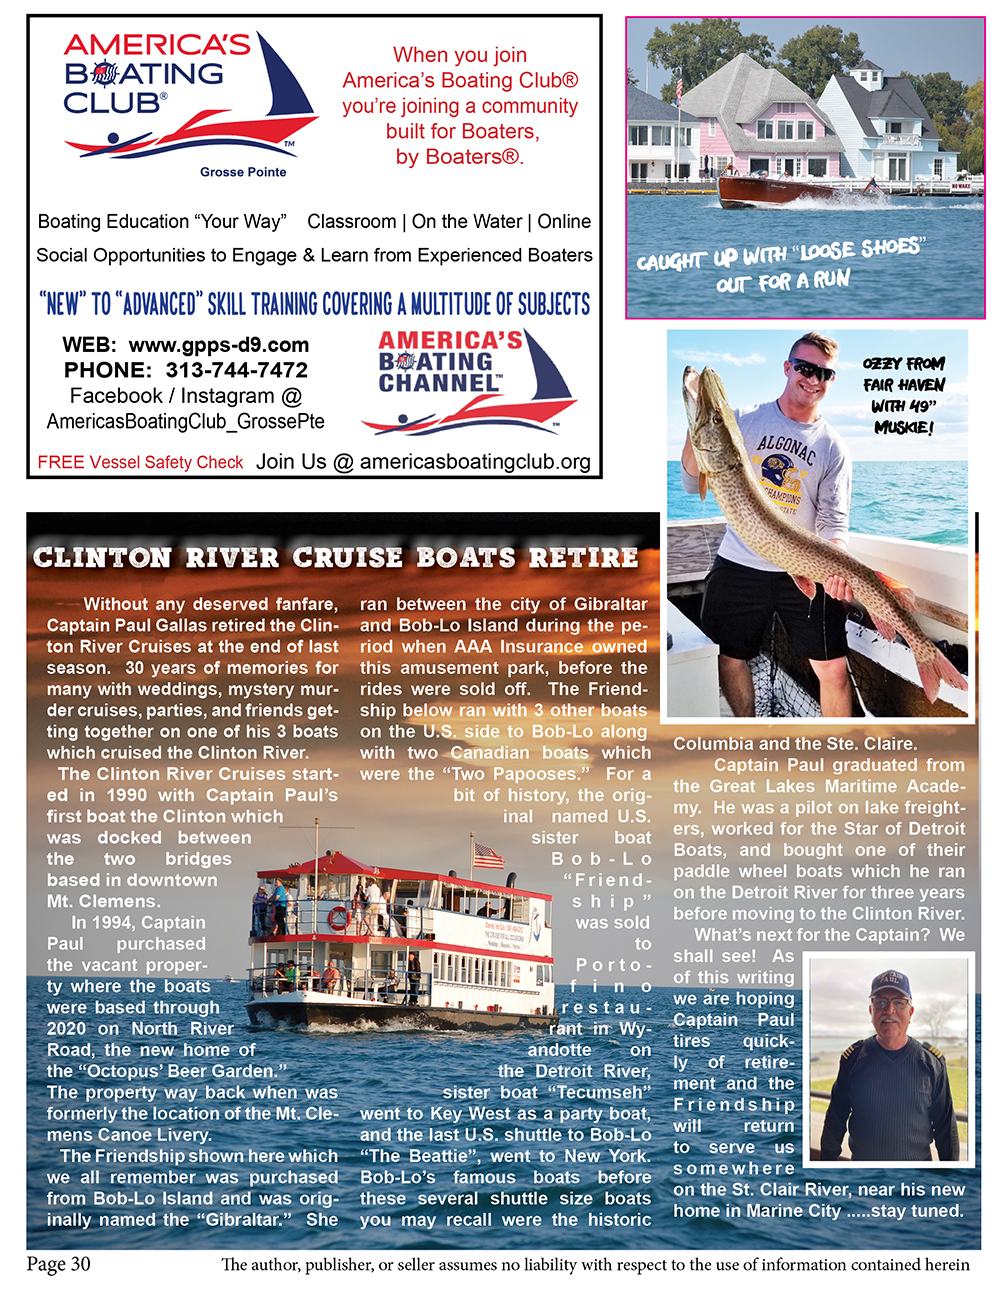 clinton river cruise boat closed retires